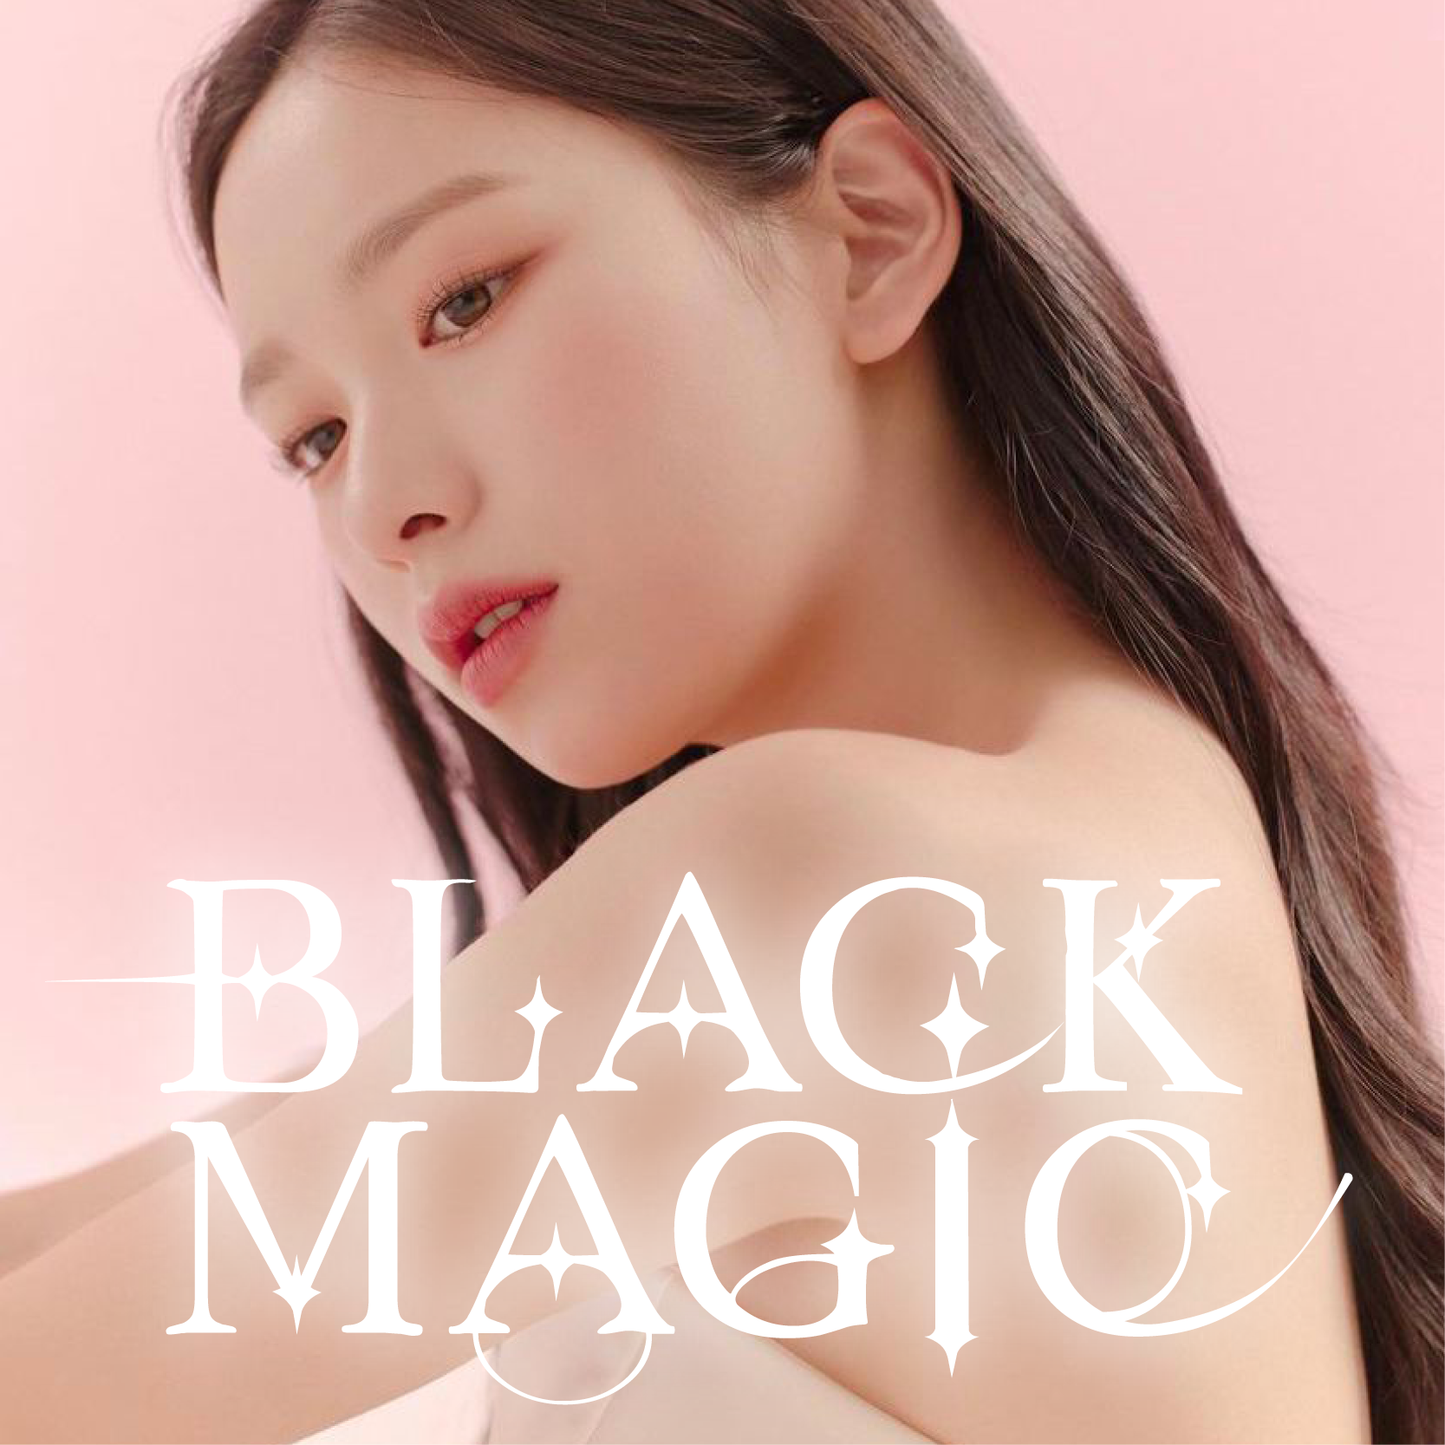 Black Magic - Lady Concept